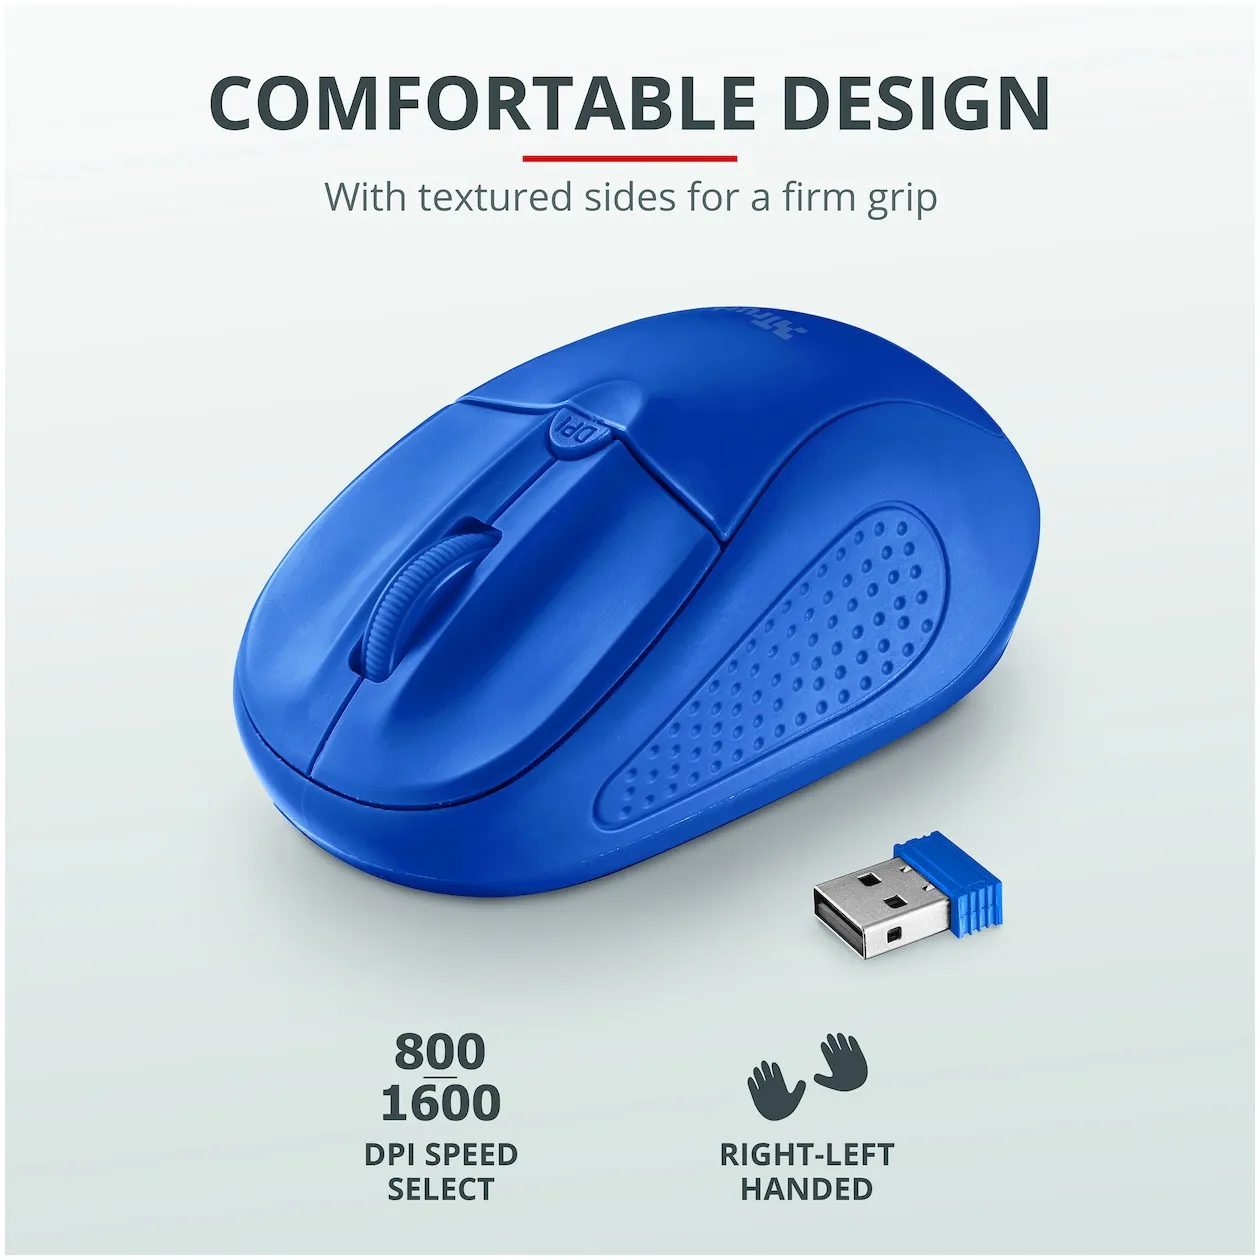 Trust Primo Wireless Mouse Blauw